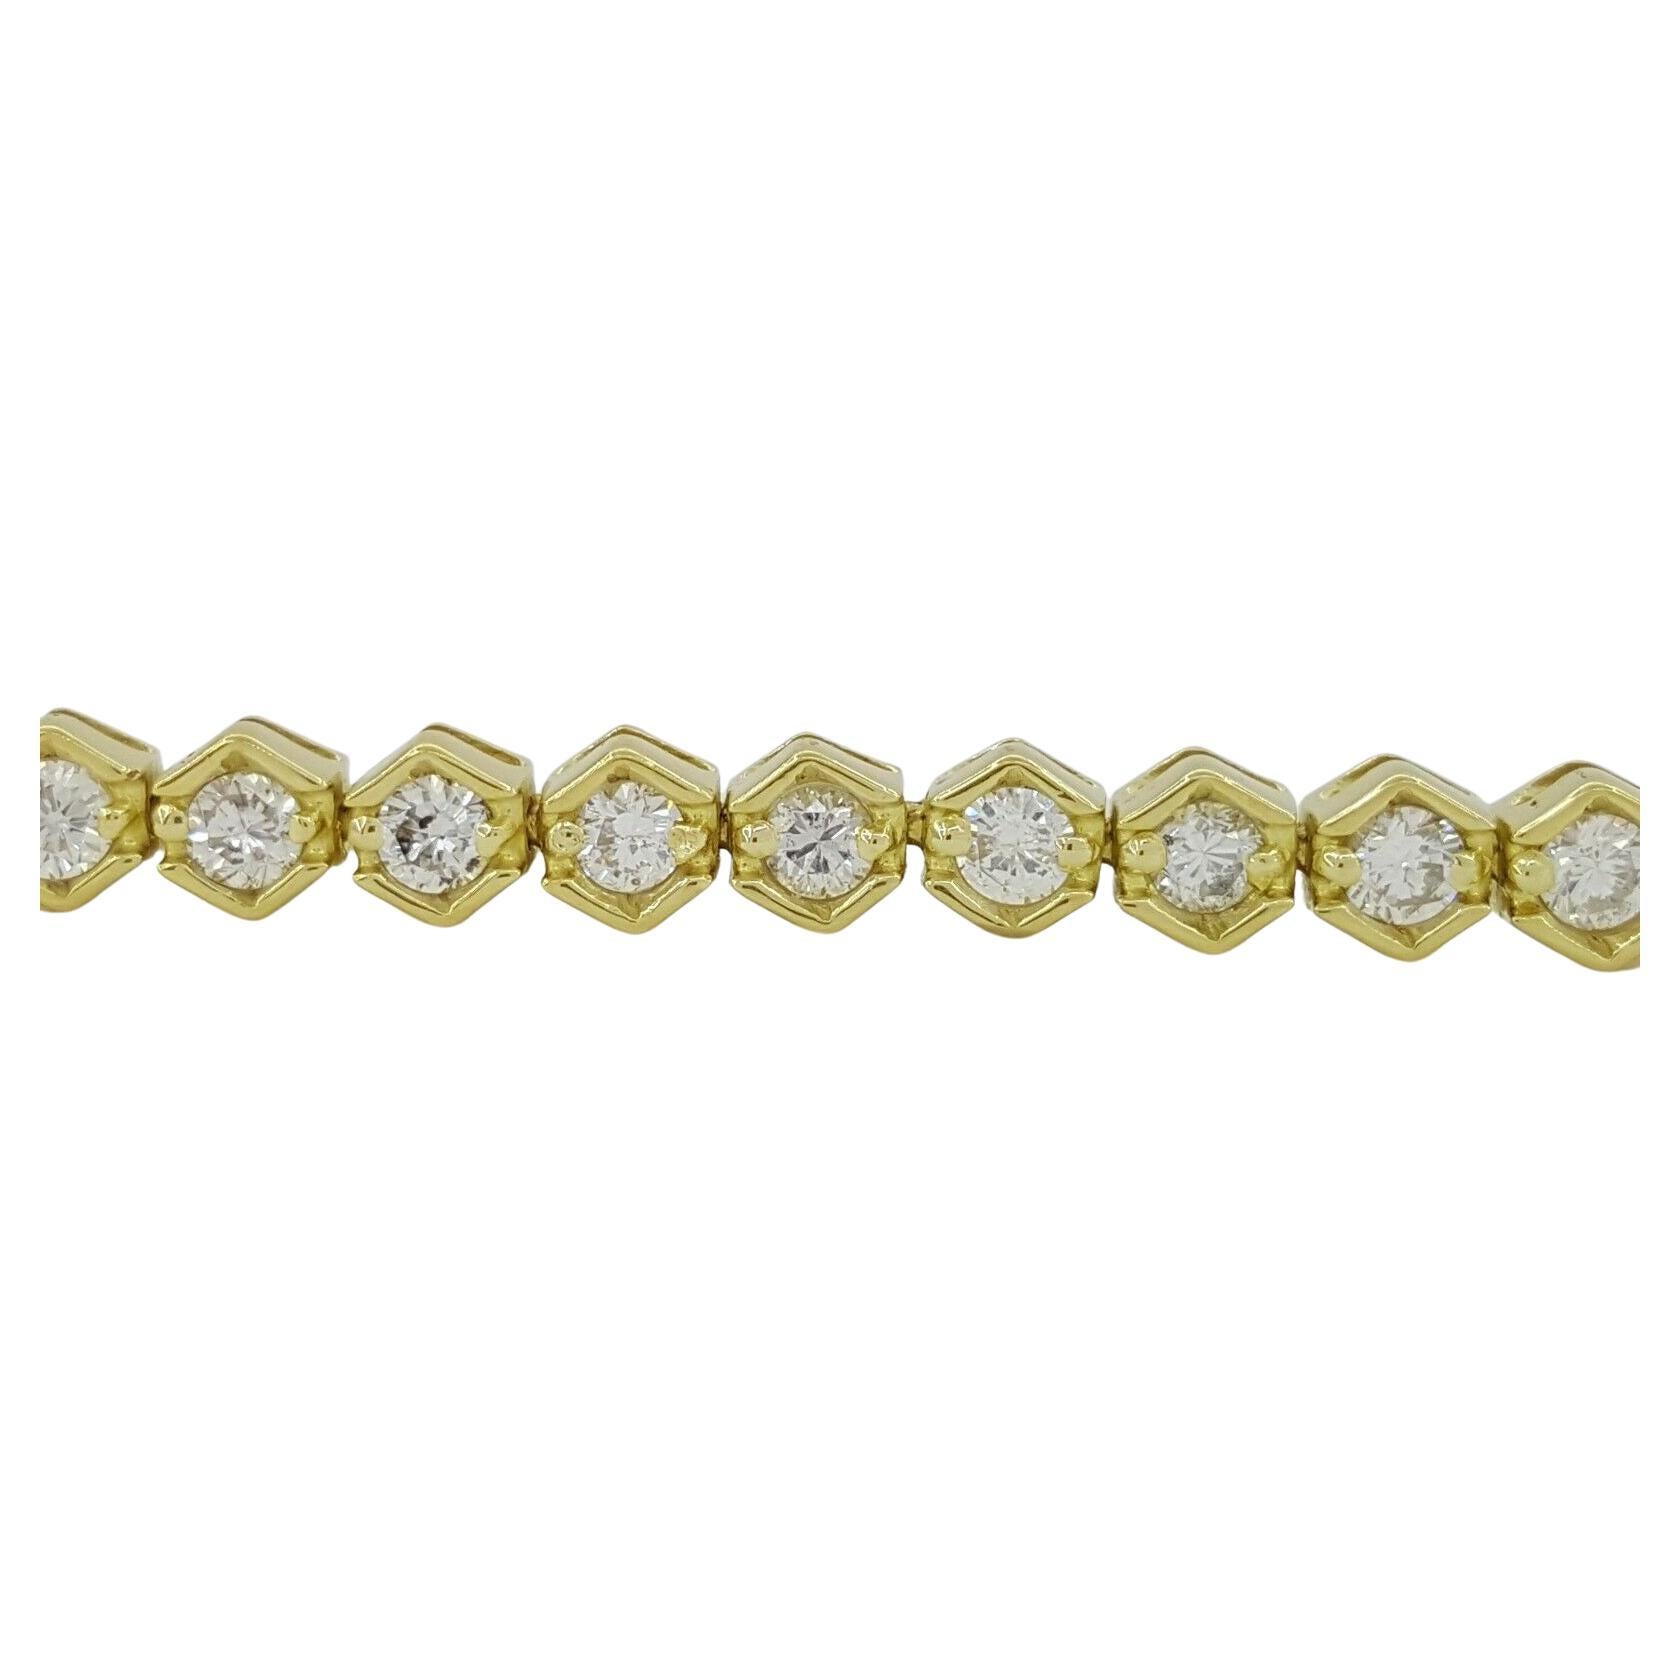 2.5 ct total weight 18K Yellow Gold Round Brilliant Cut Diamond Tennis Bracelet
